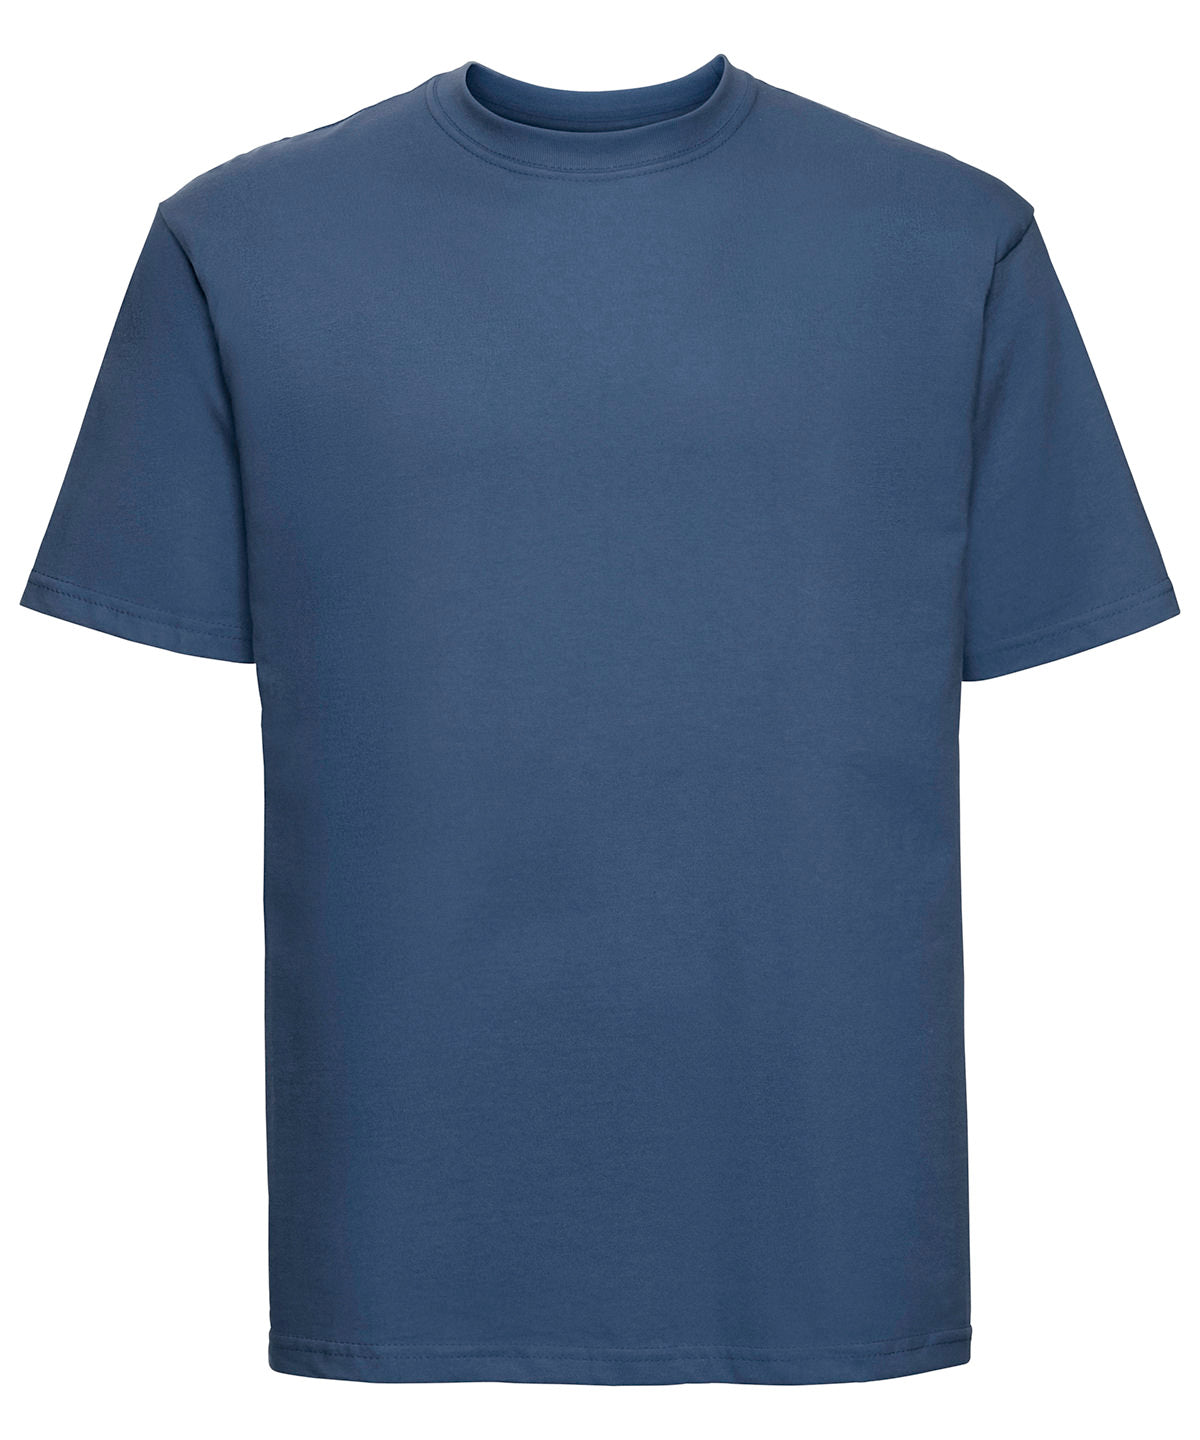 Russell Super Ringspun Classic T-Shirt Indigo Blue